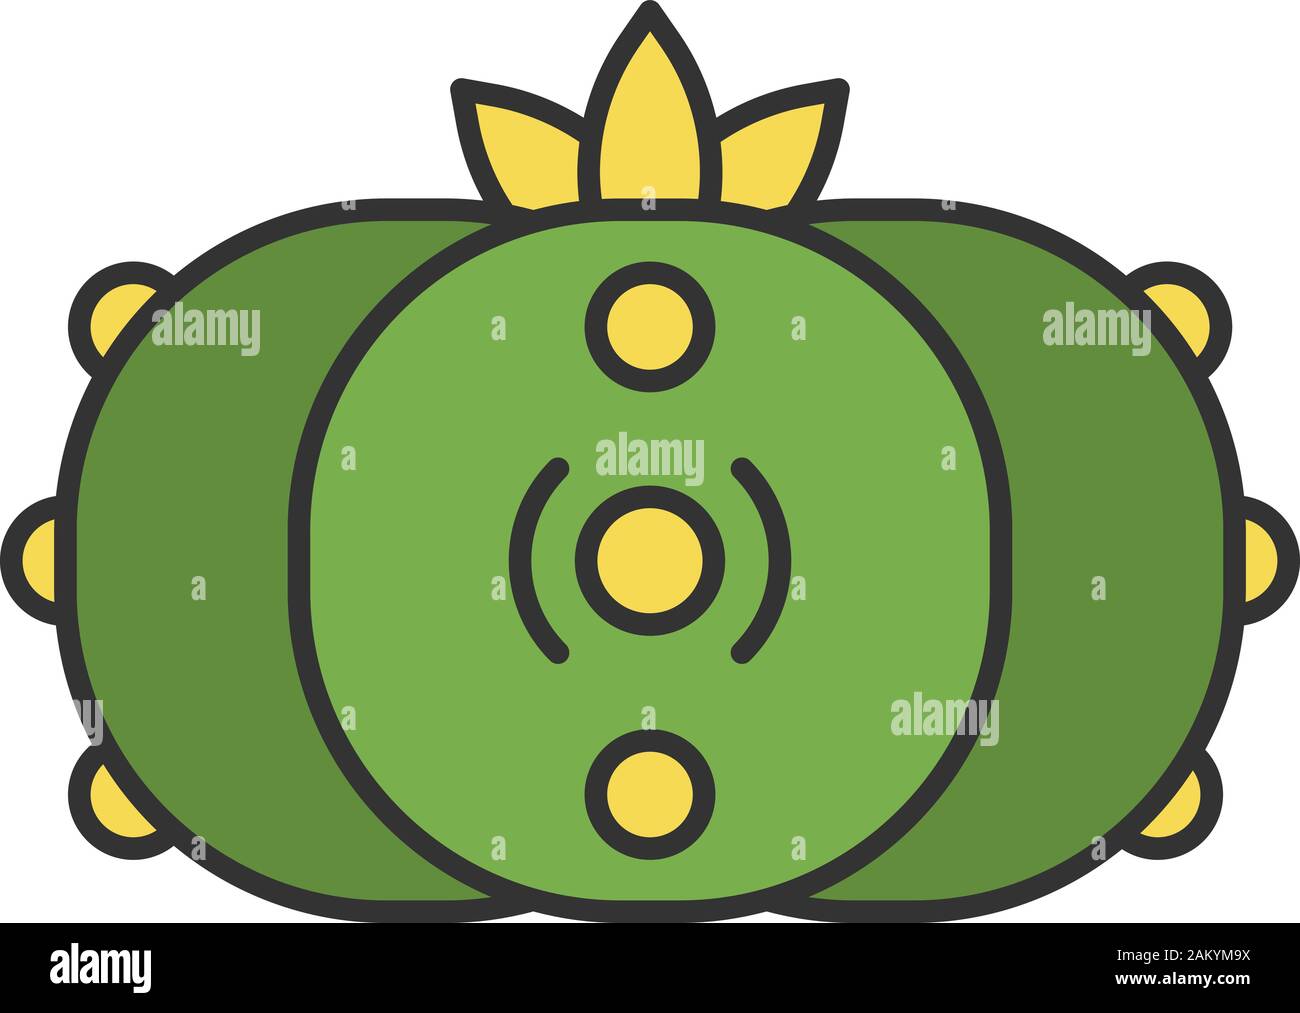 Peyote cactus color icon. Lophophora. Mescal button. Hallucinogenic cactus. Mexico native flora. Isolated vector illustration Stock Vector